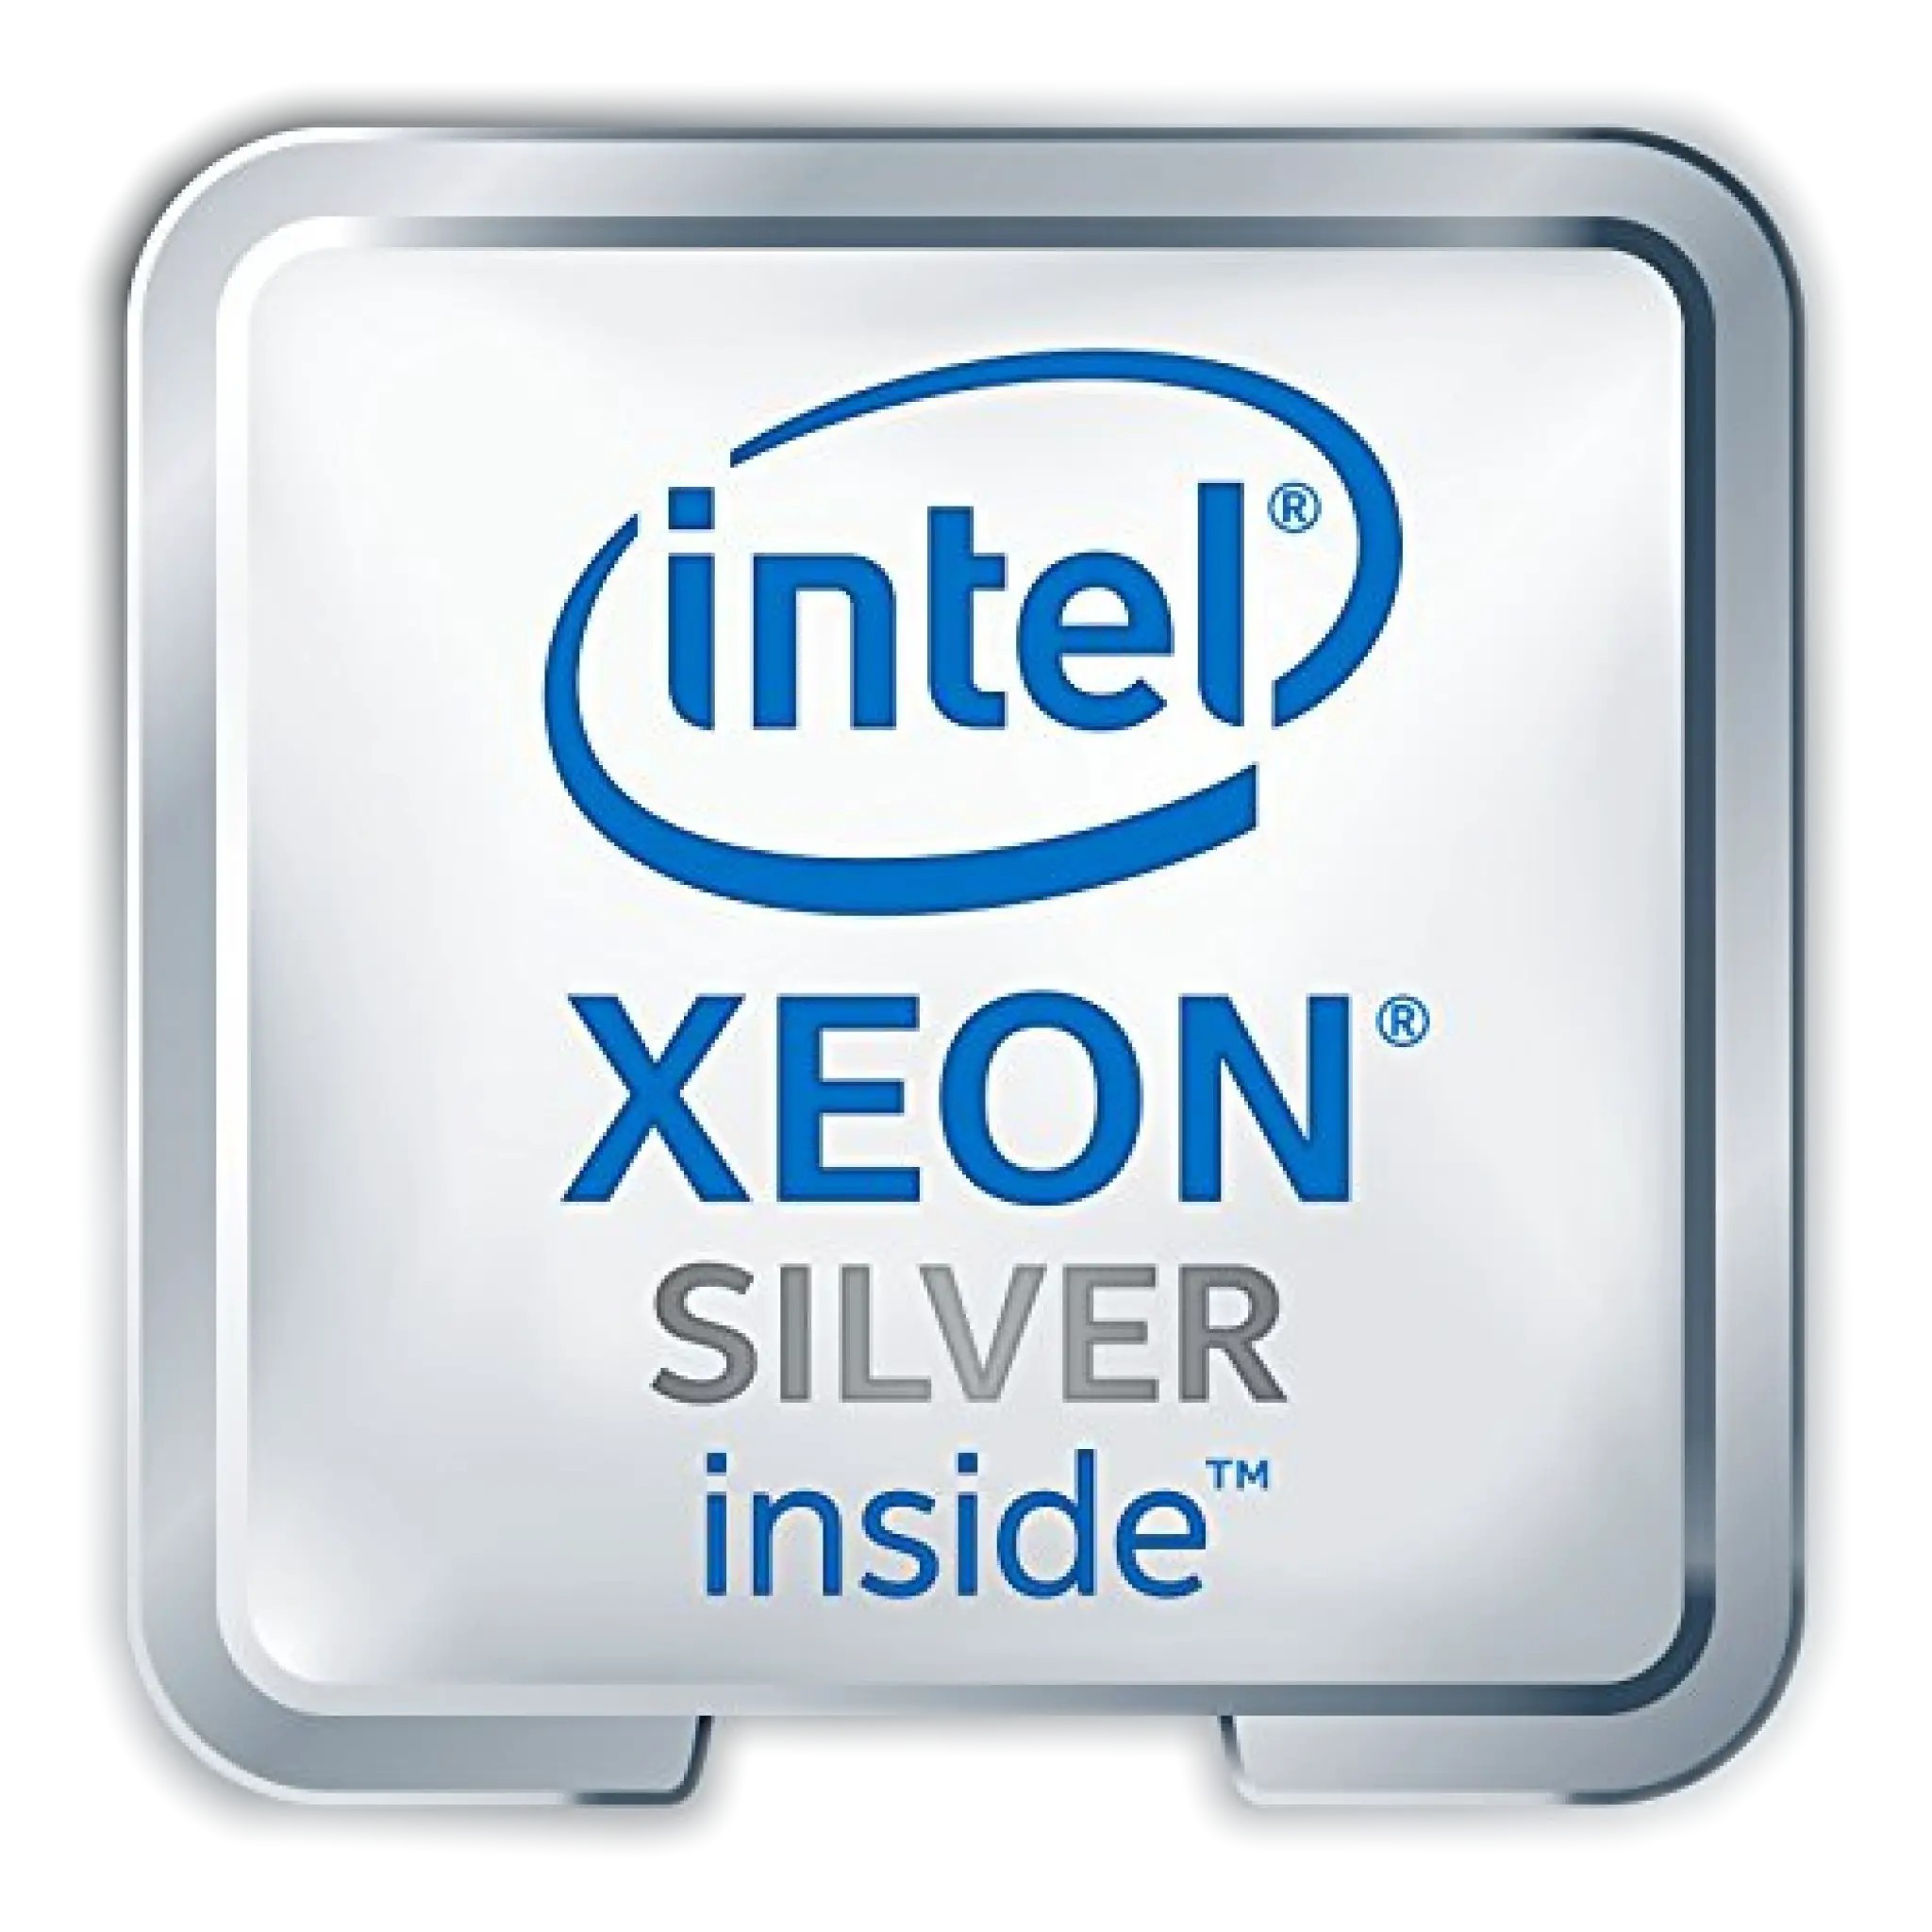 Intel Xeon Silver 4112 2.6GHz 4C 8T 8.25M Cache Sockets FCLGA3647 SR3GN - Click Image to Close